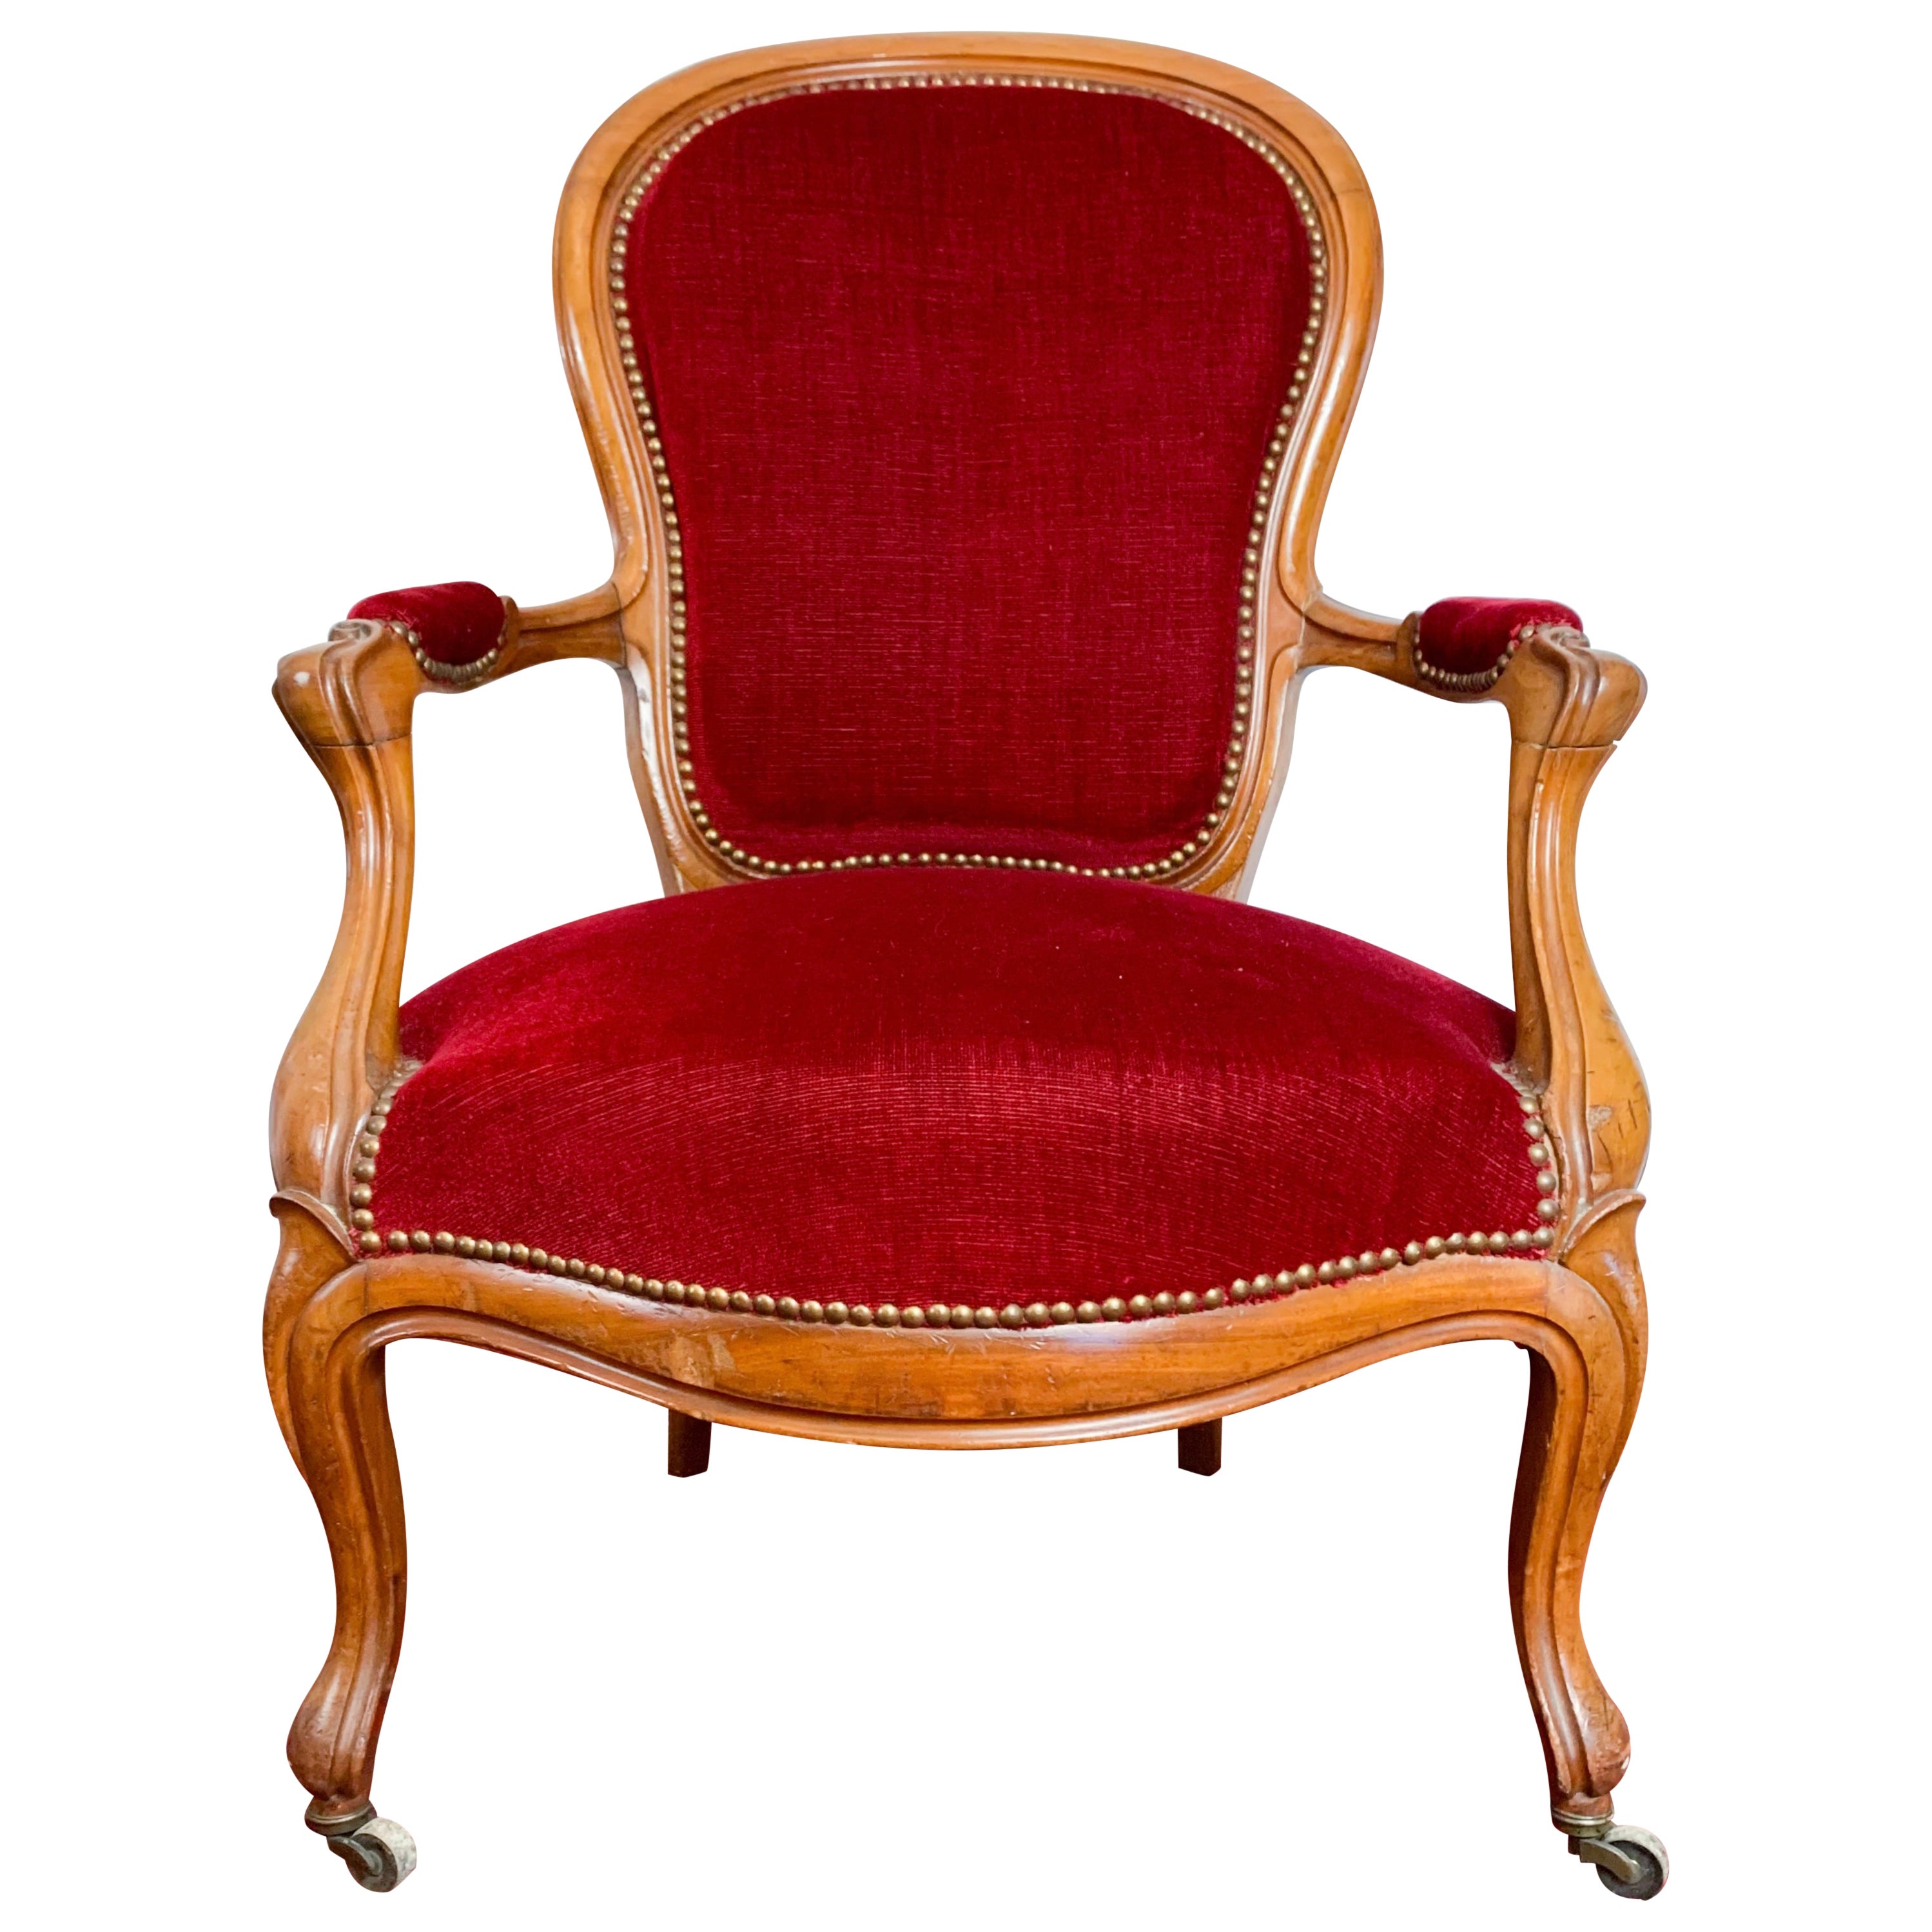 Cabriolet-Sessel im Louis-XV-Stil, um 1850